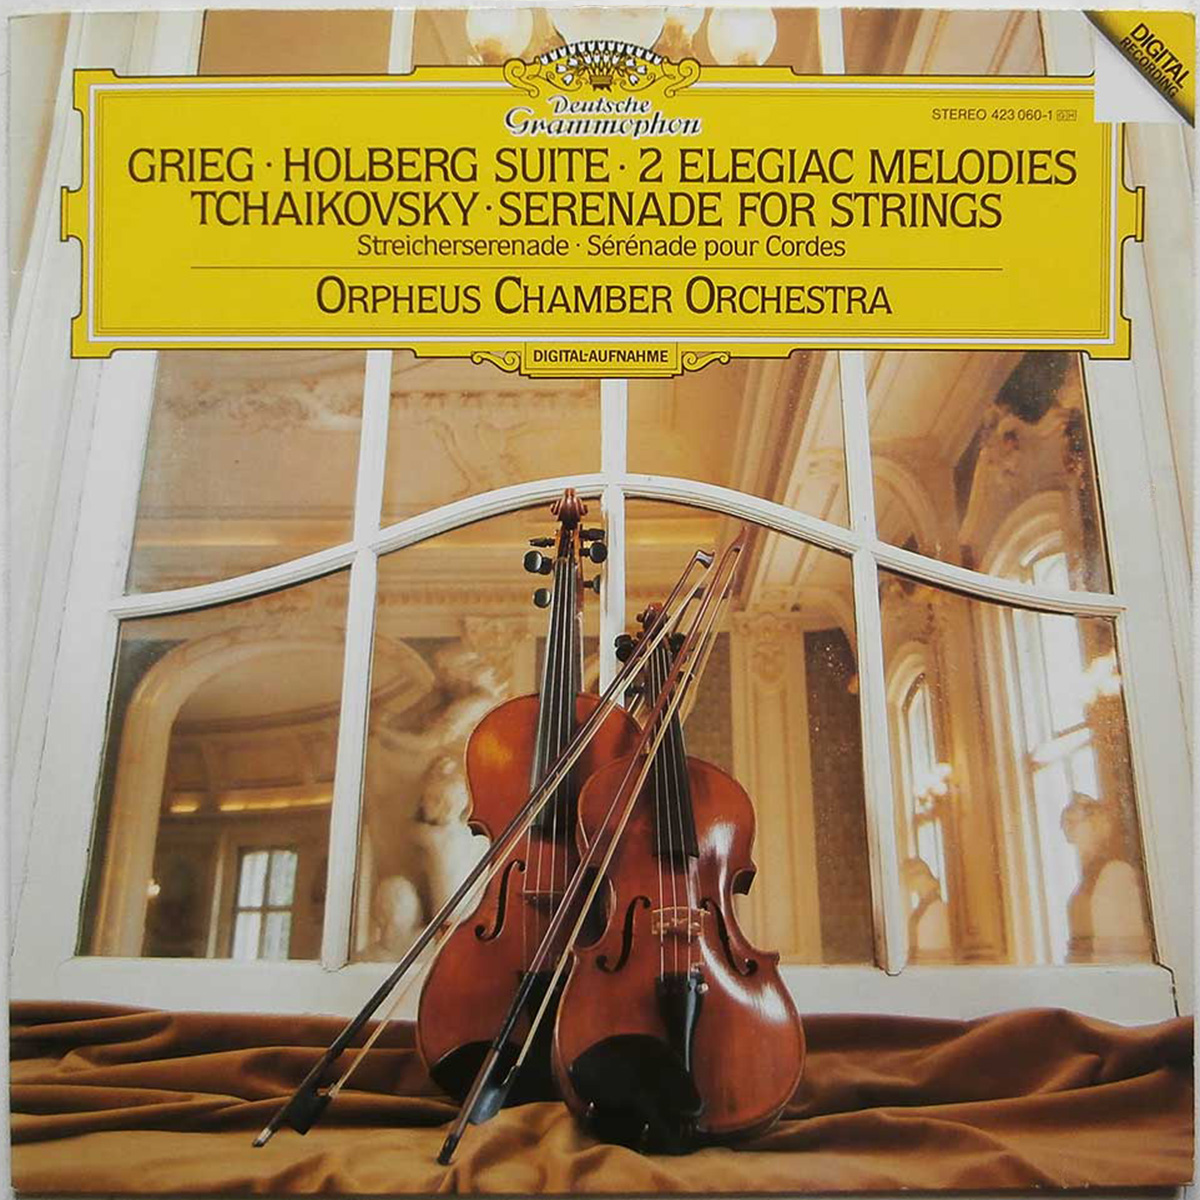 DGG 423 060 Grieg Holberg Suite Elegiac Melodies Tchaikovsky Serenade For Strings DGG Digital Aufnahme